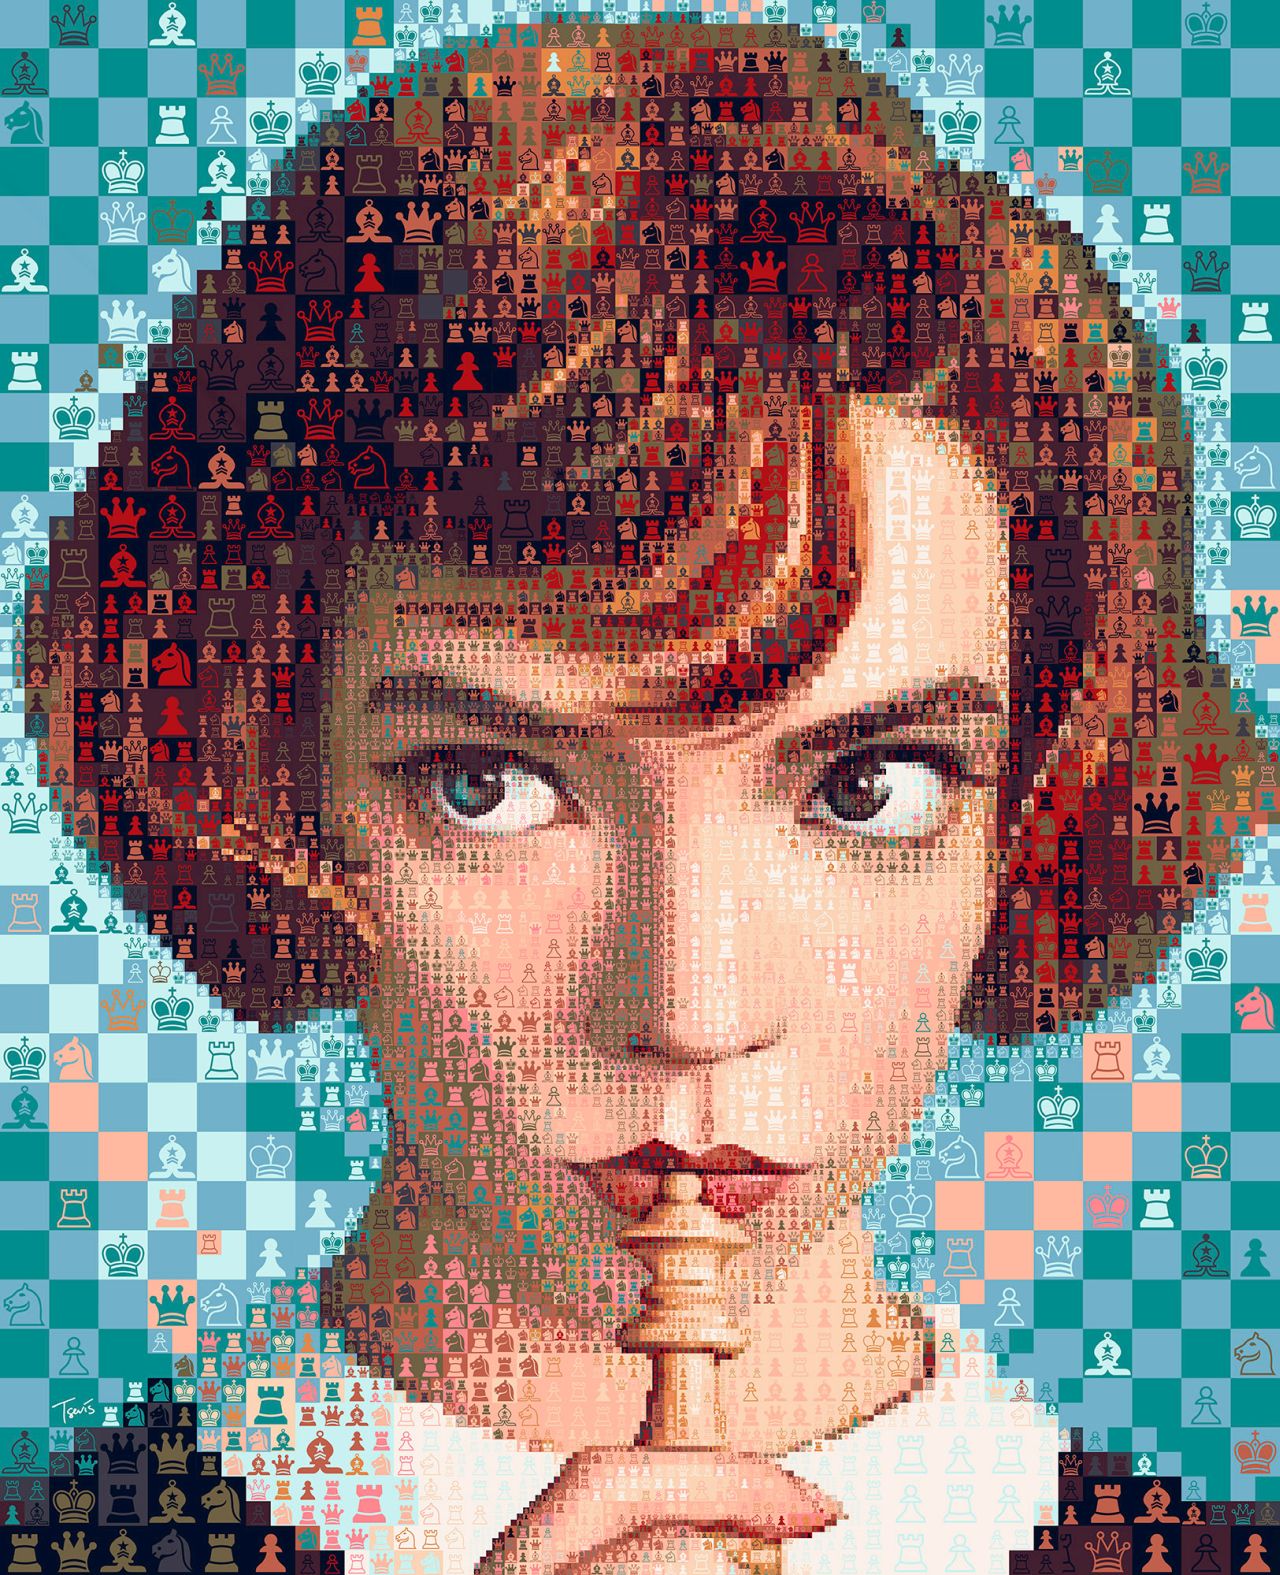 photo mosaic art queen gambit by charis tsevis